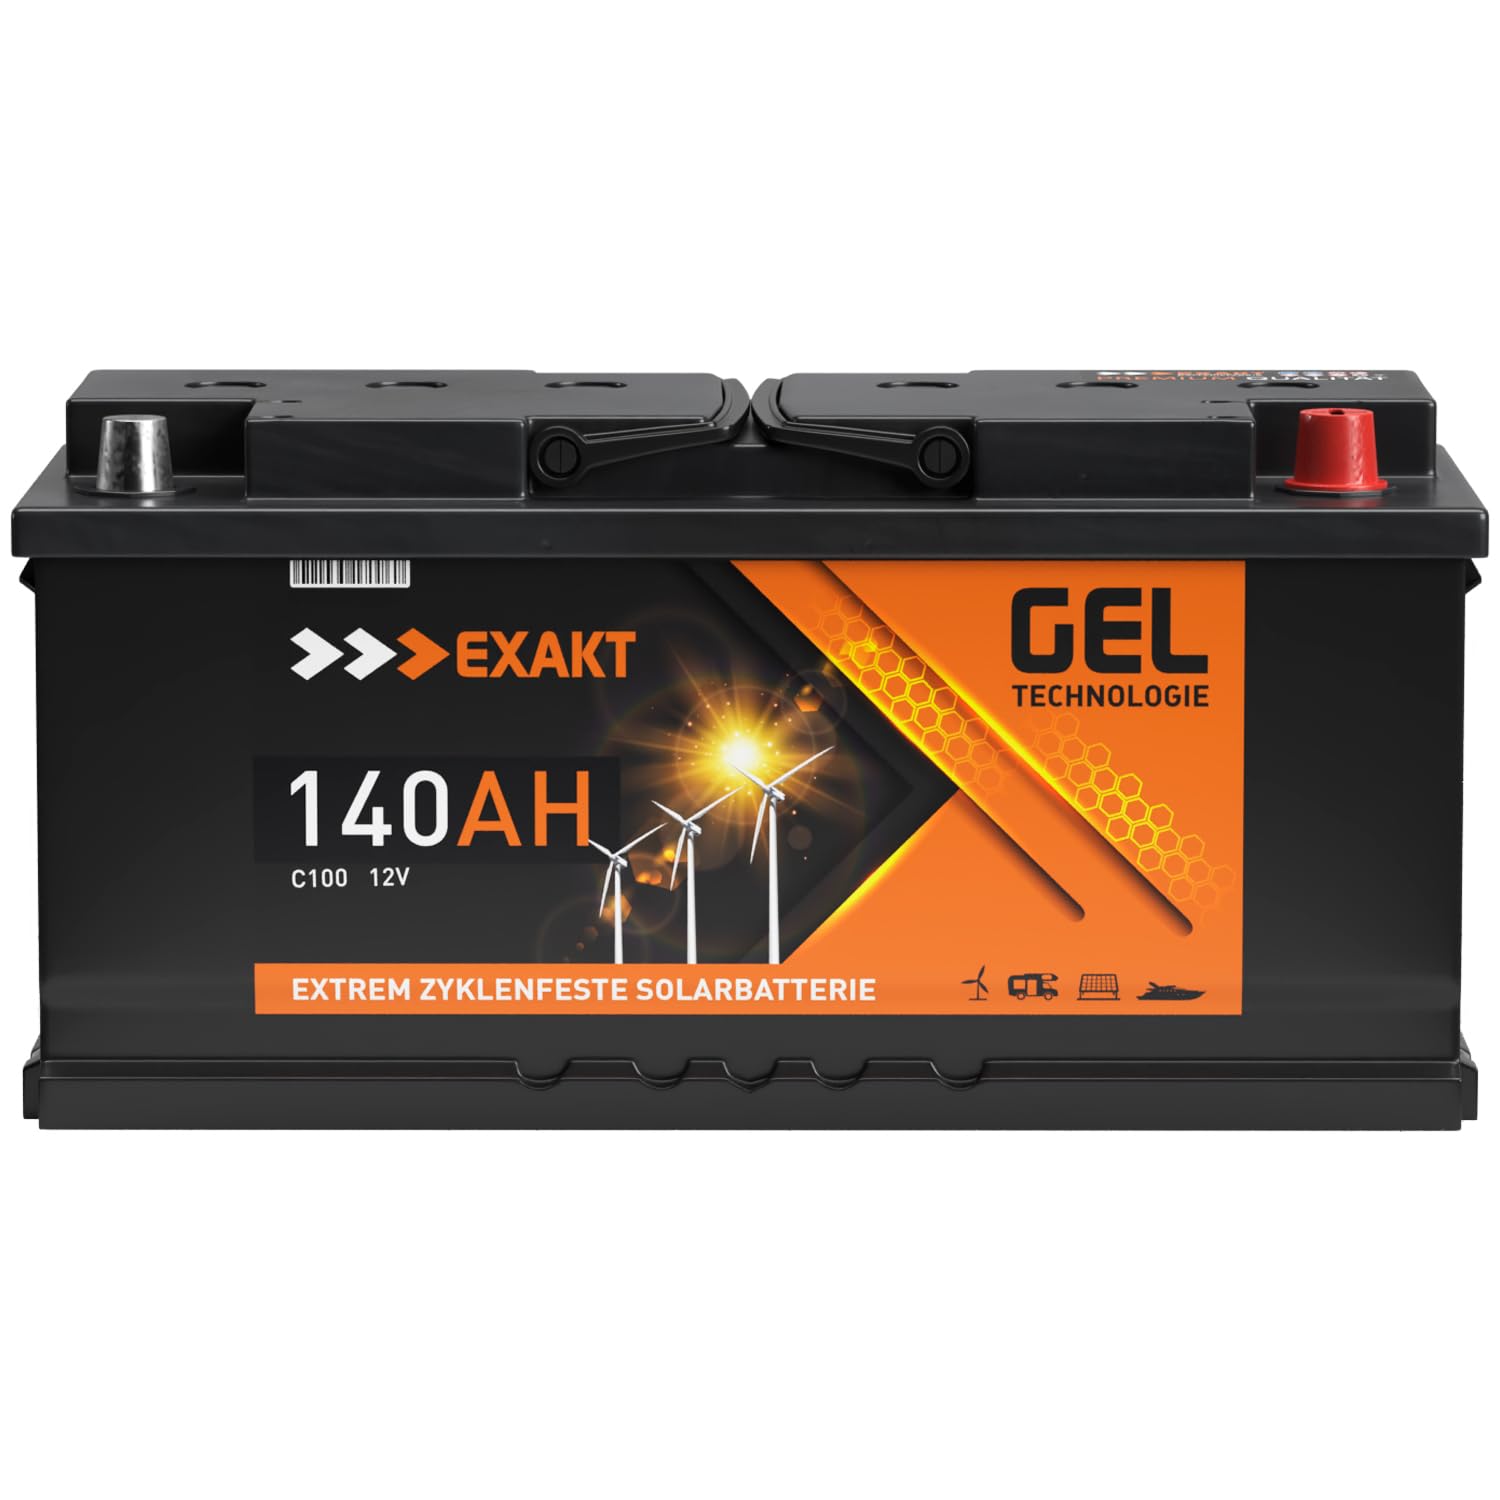 EXAKT GEL Batterie 12V 140Ah Solarbatterie Wohnmobil Batterie Versorgung Bootsbatterie Gelbatterie Gel Akku ersetzt 120Ah 110Ah von Exakt